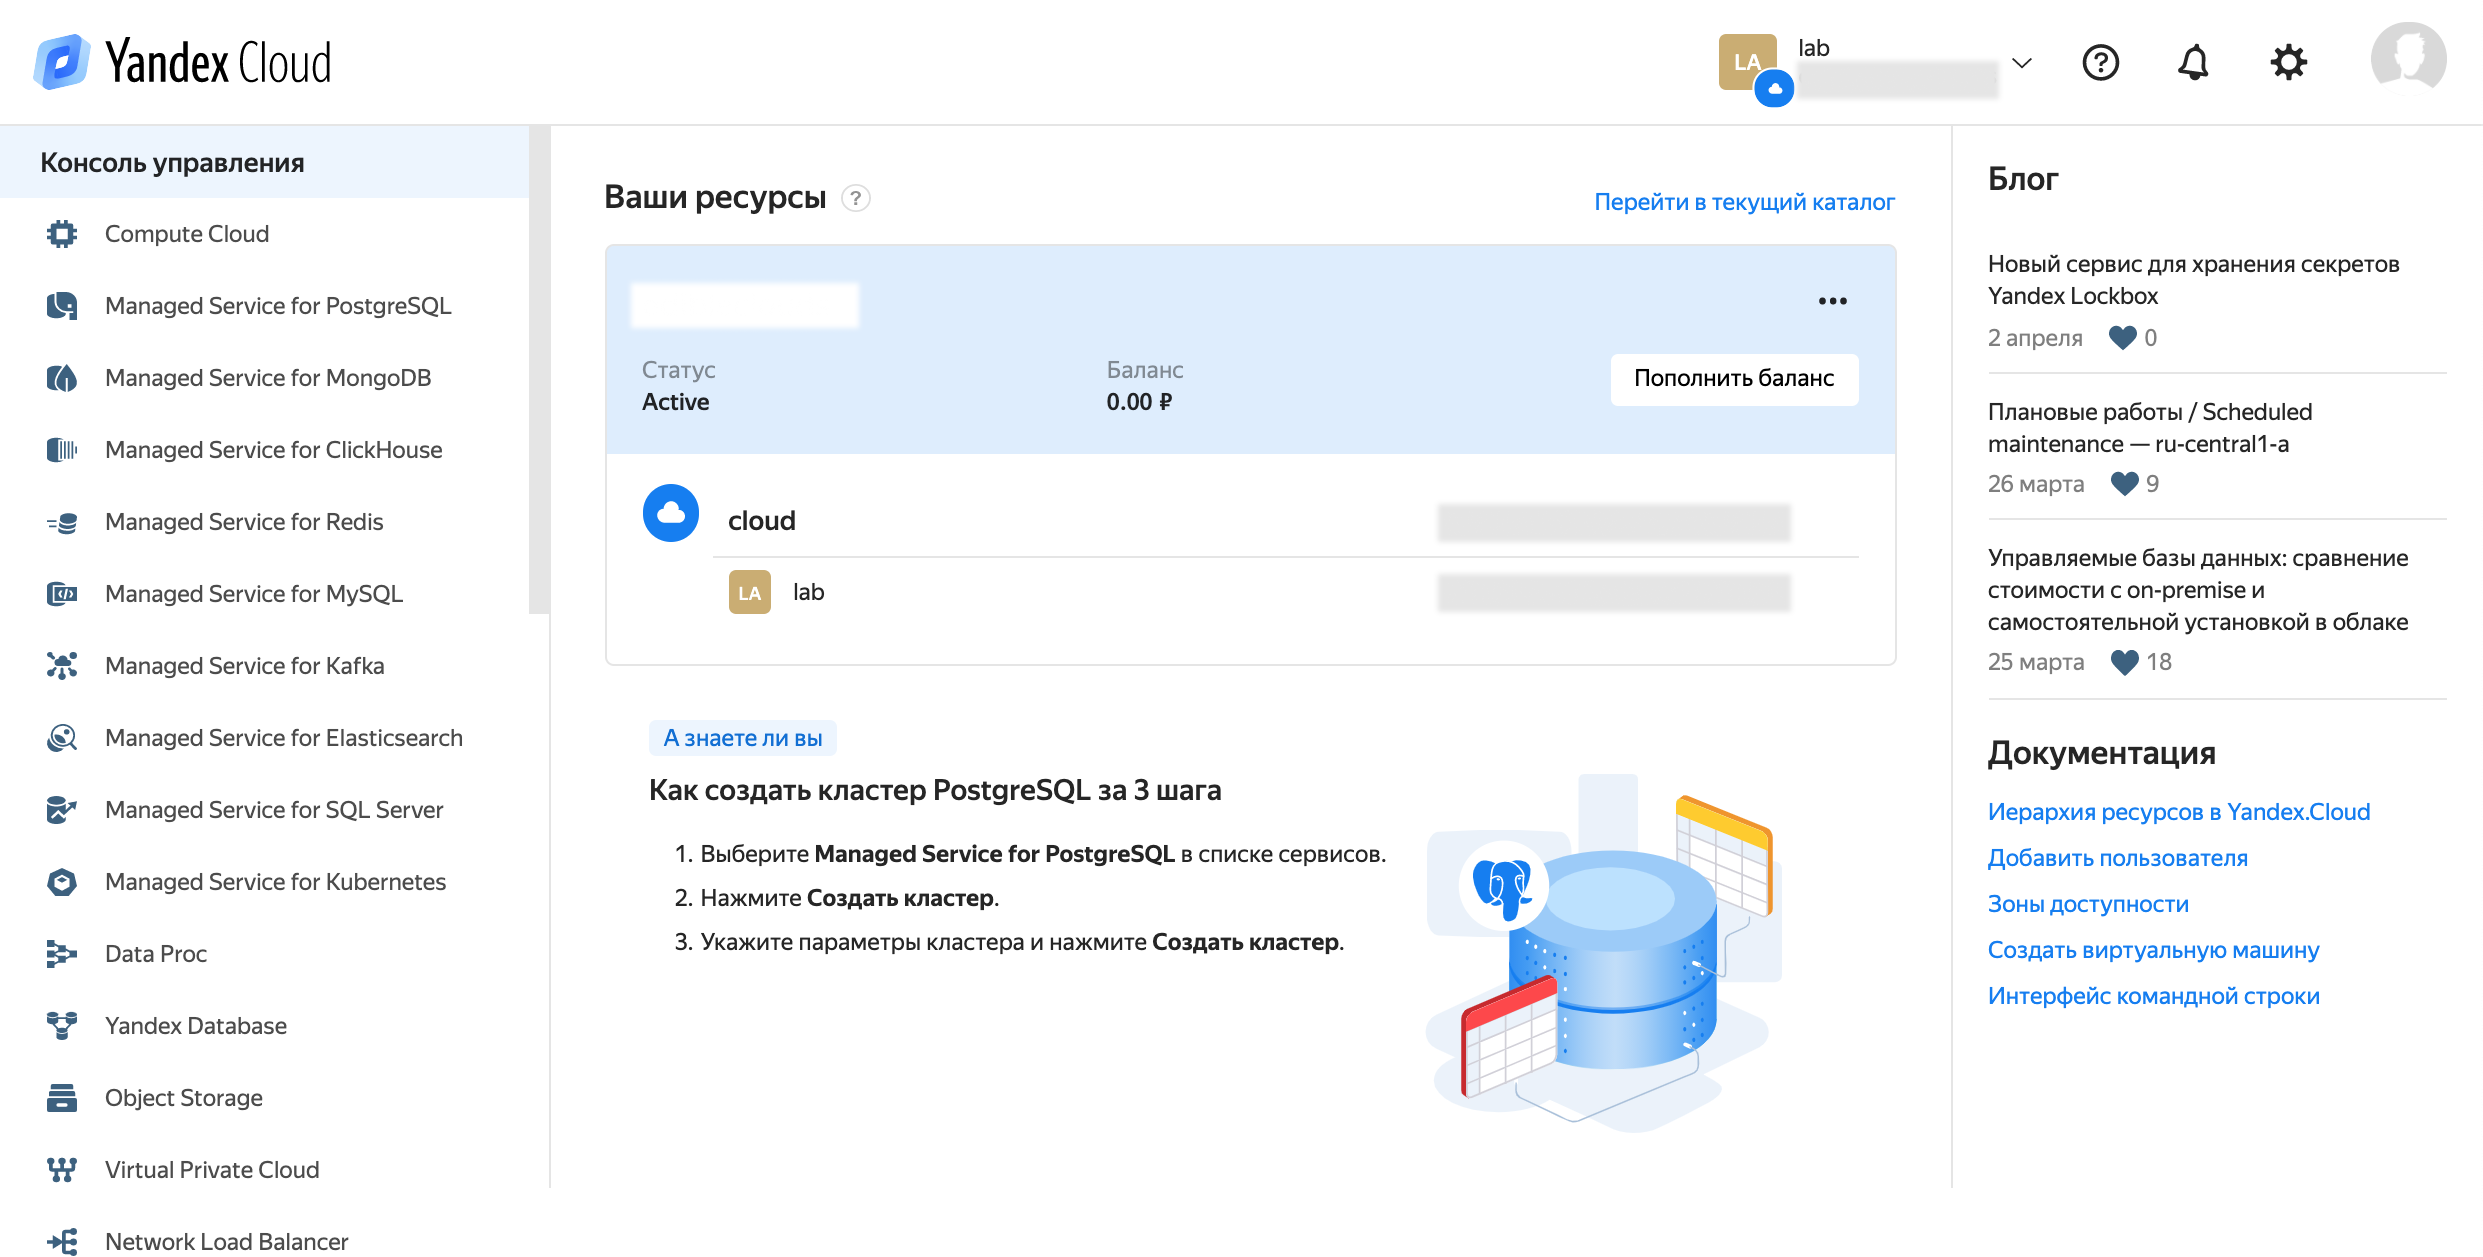 Yandex.Cloud console main